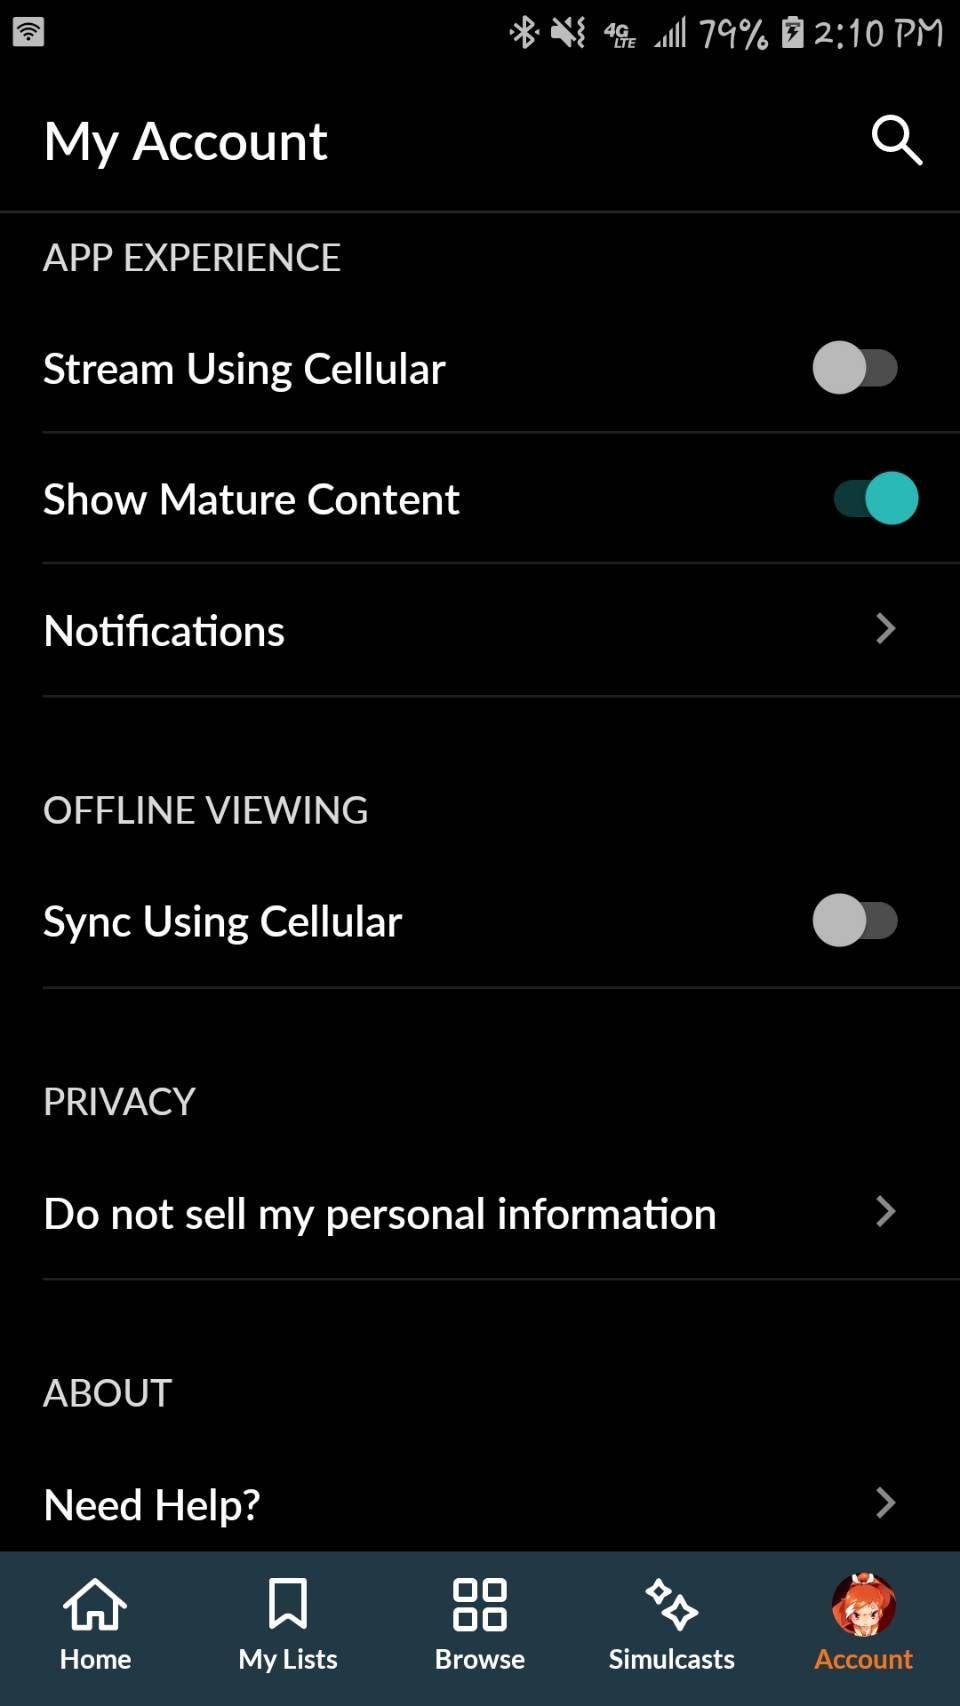 Crunchyroll offline viewing sync option under app